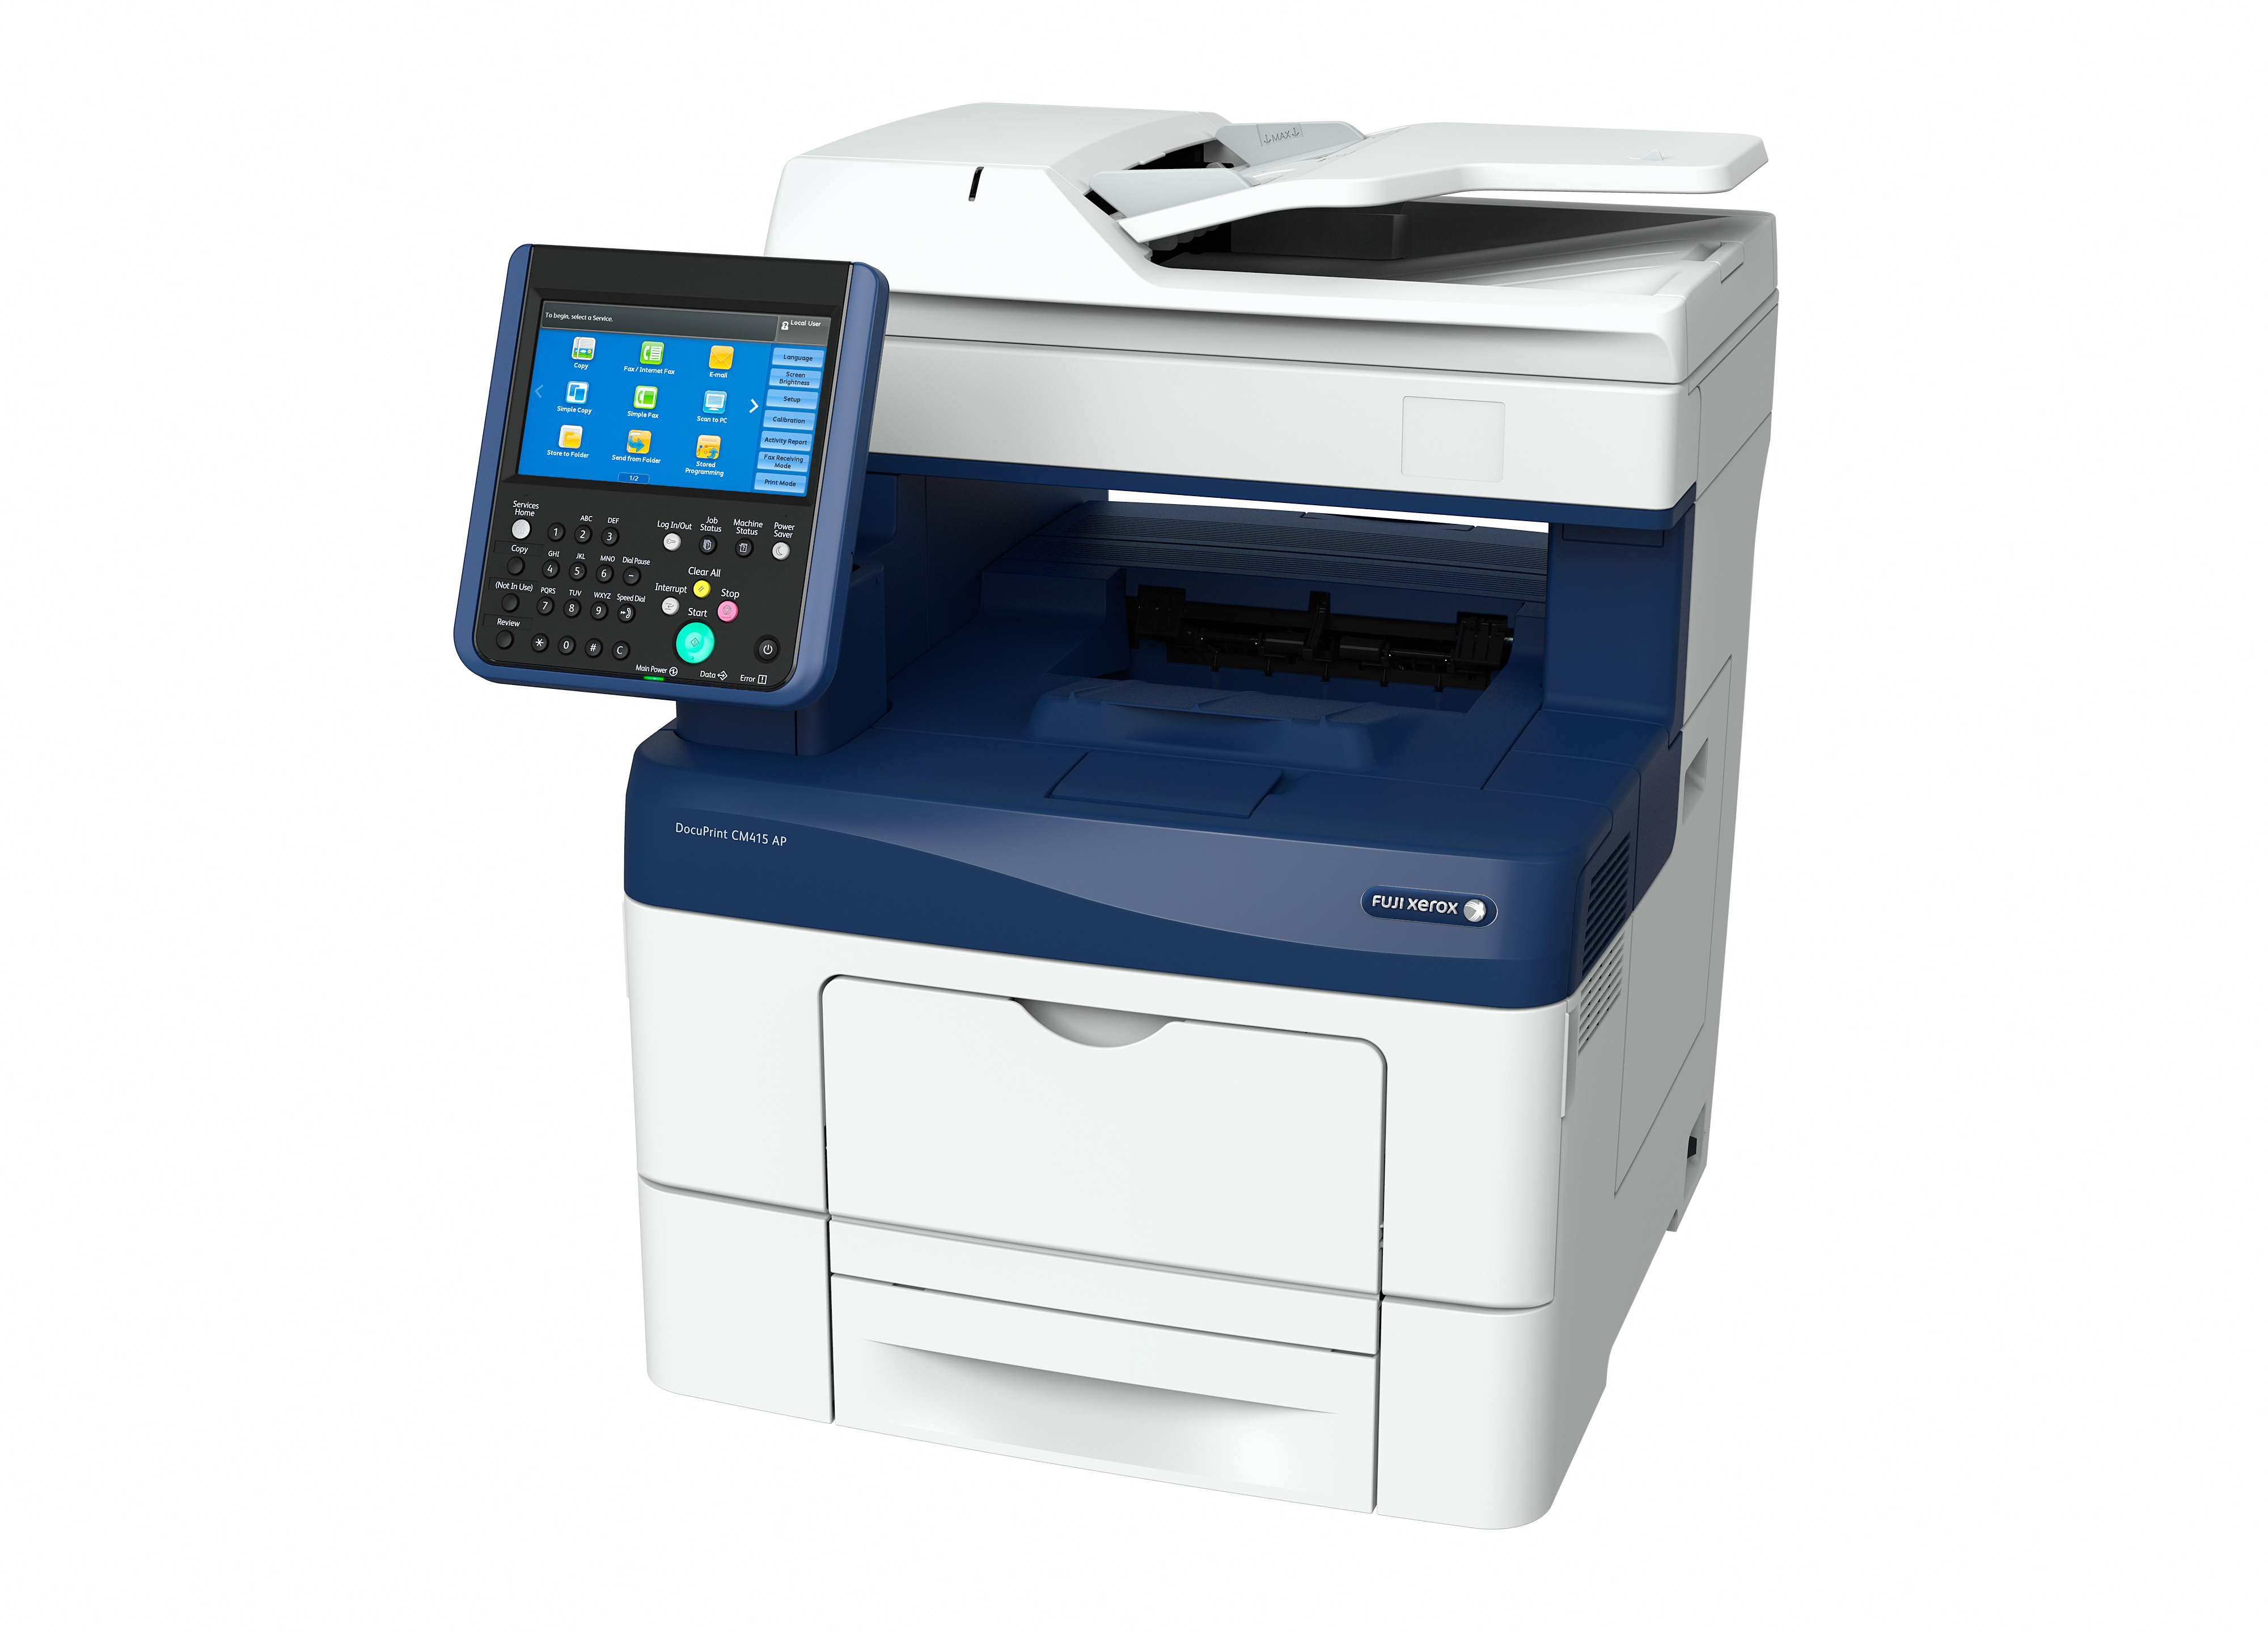 Fuji Xerox DocuPrint CM415 Colour MultiFunction Printer